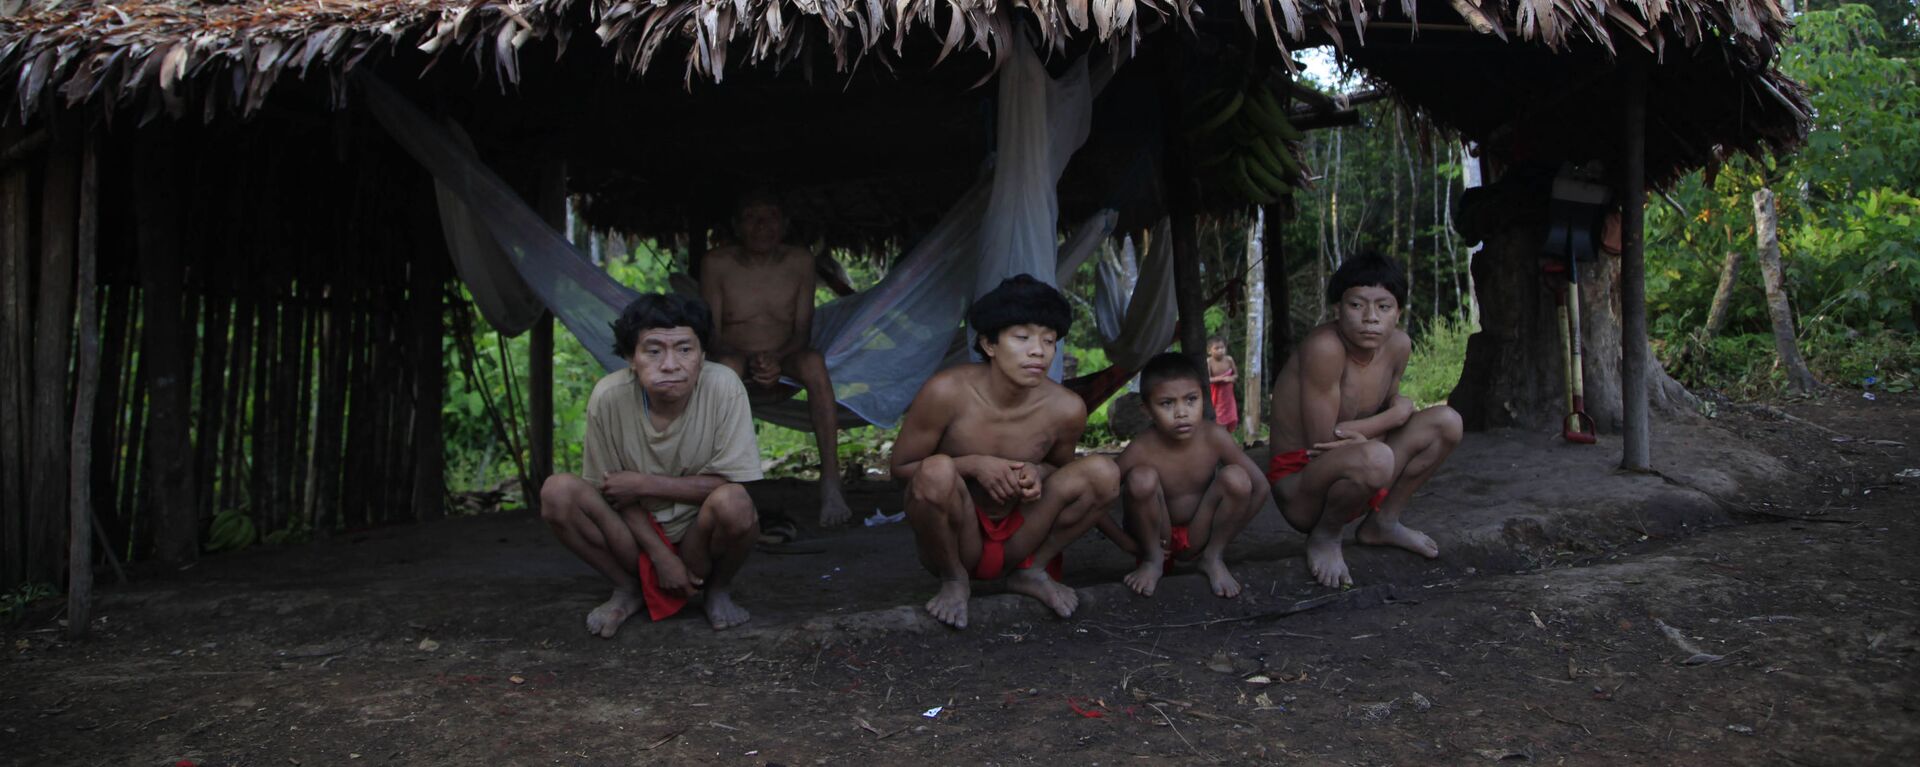 Indígenas Yanomami - Sputnik Mundo, 1920, 28.01.2021